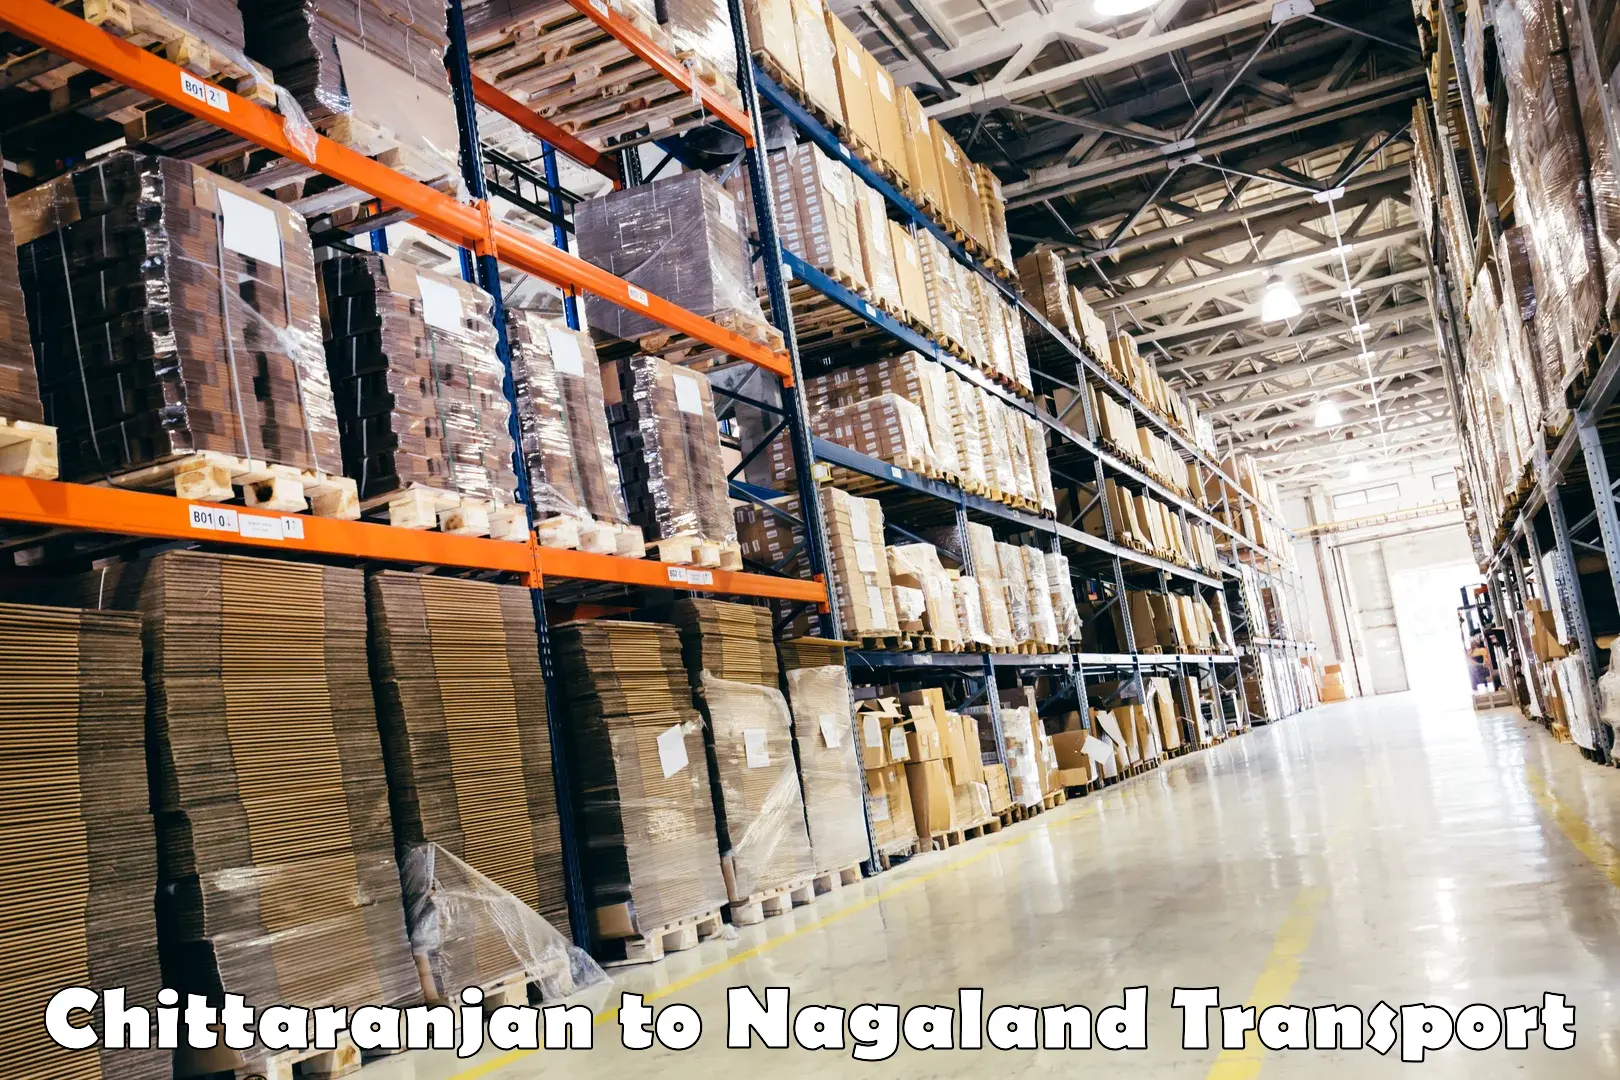 Delivery service Chittaranjan to Nagaland